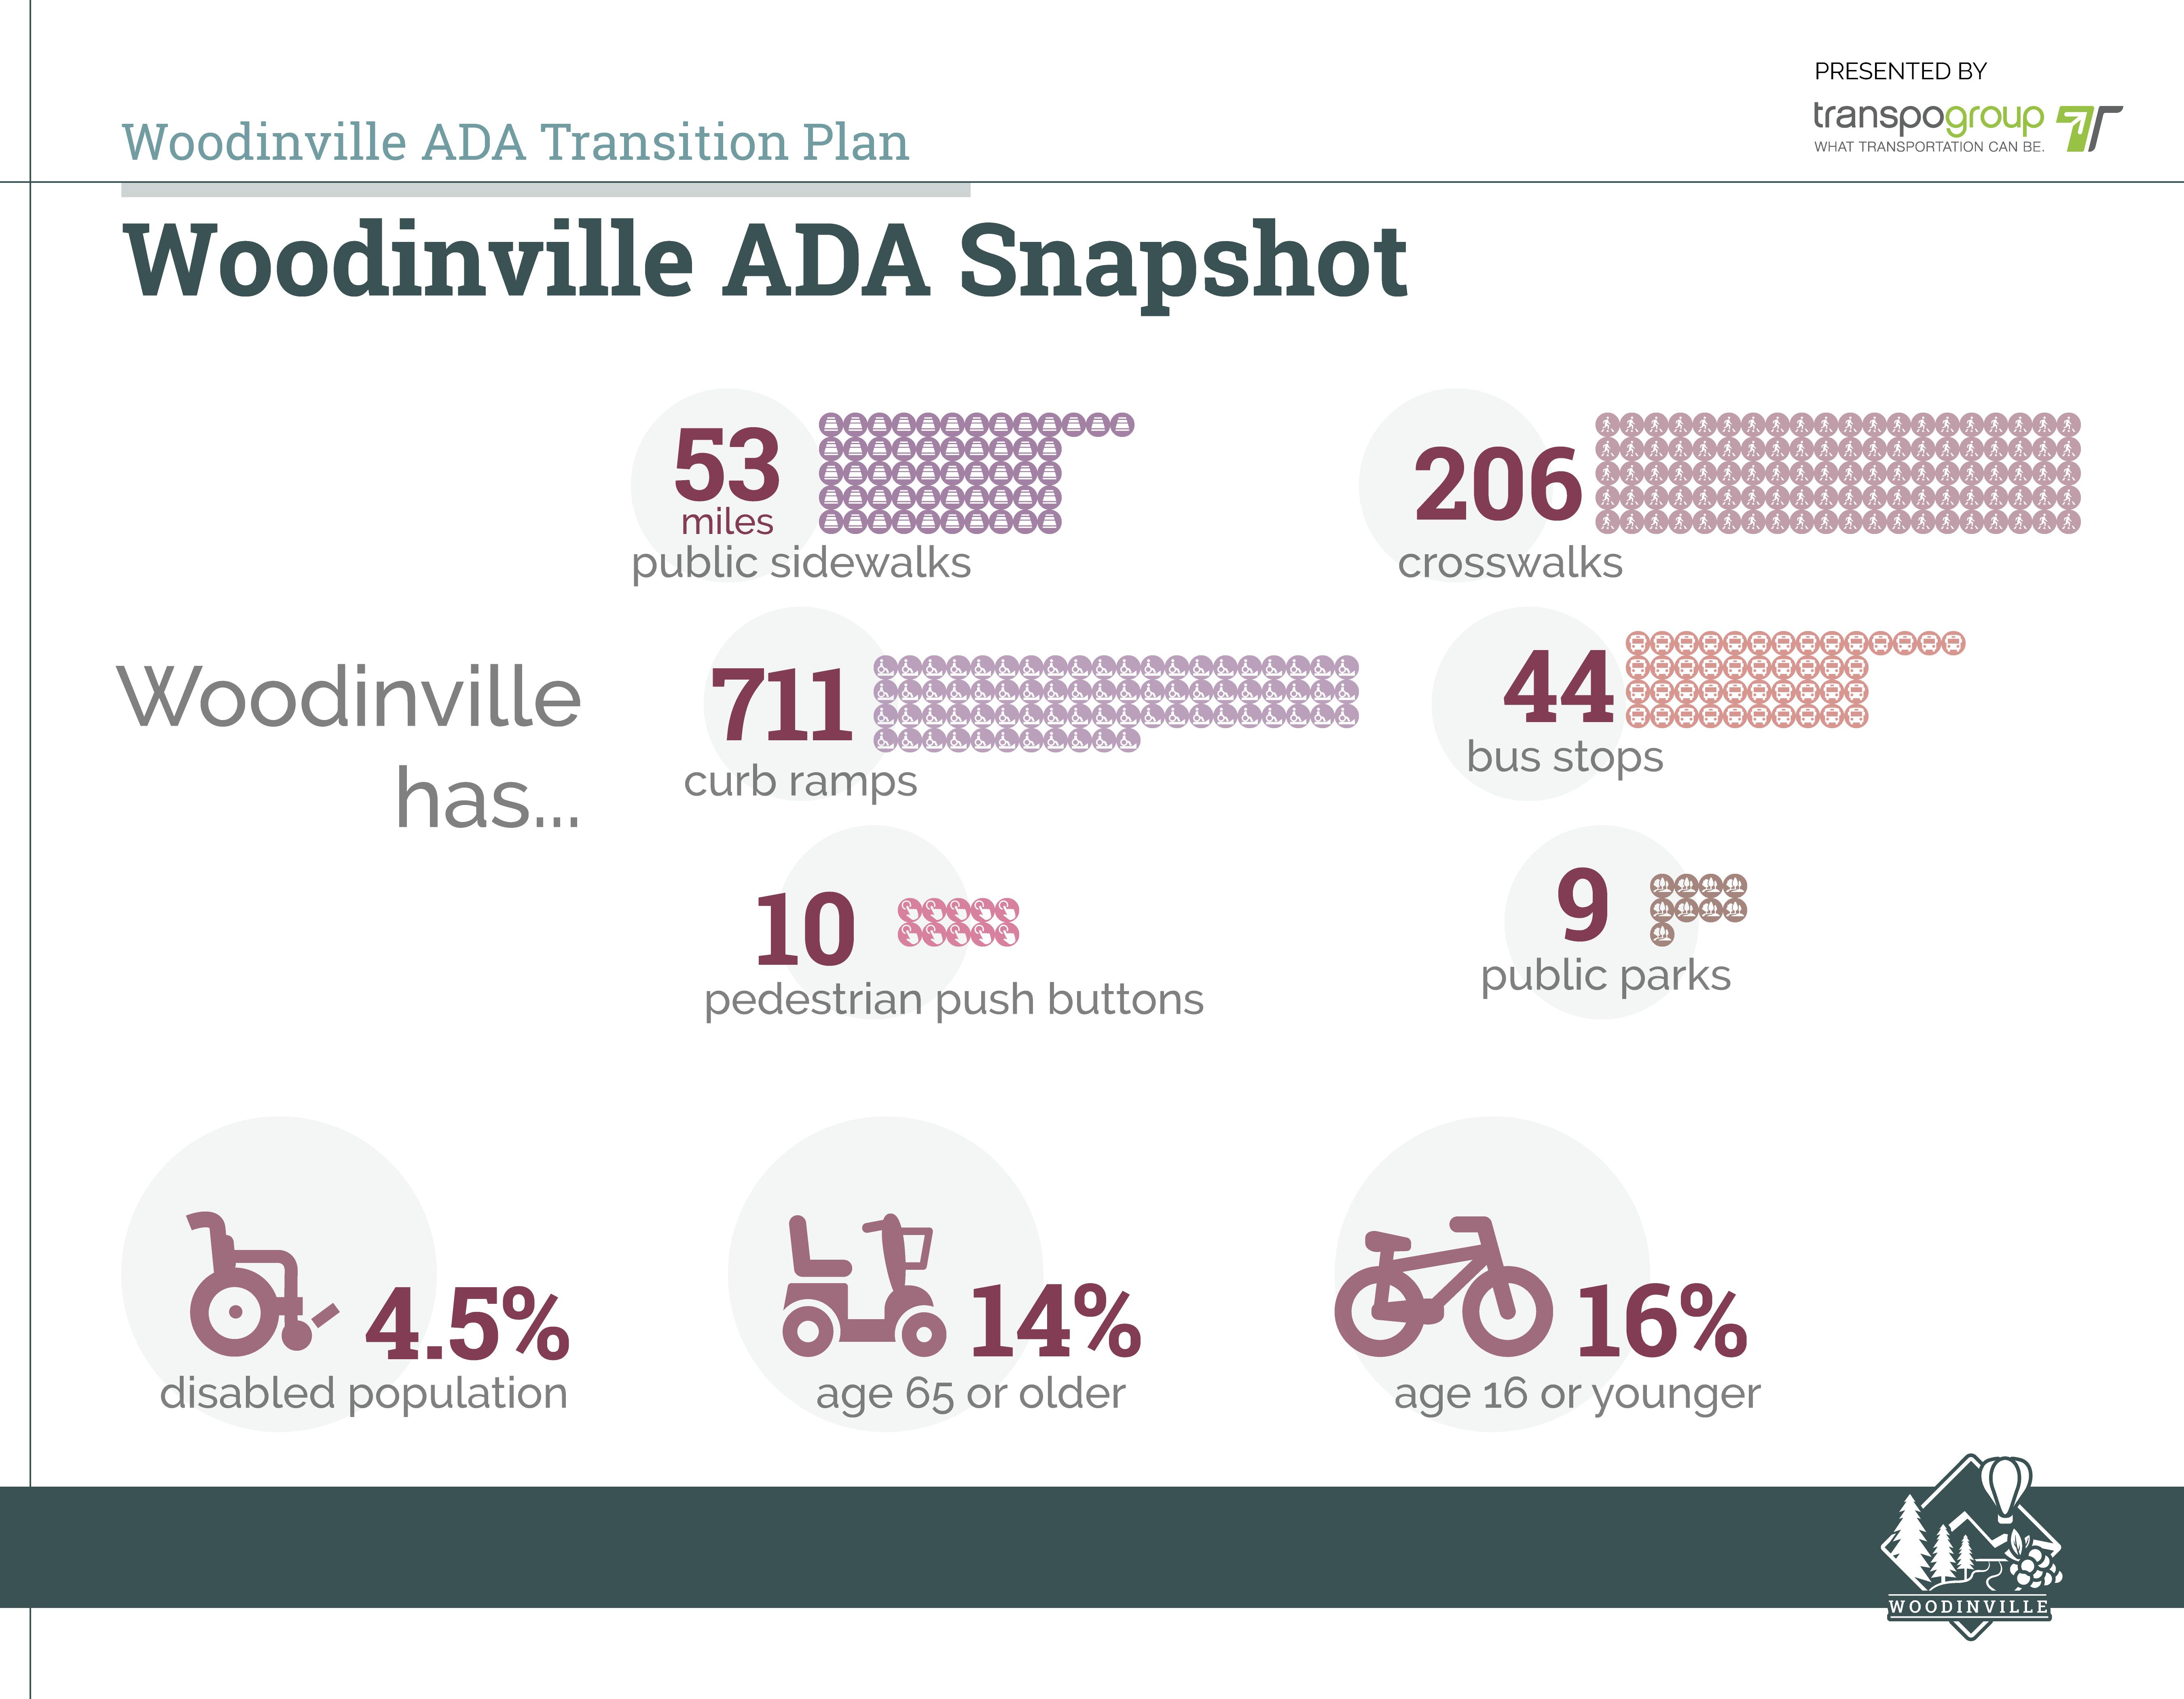 Woodinville ADA Snapshot